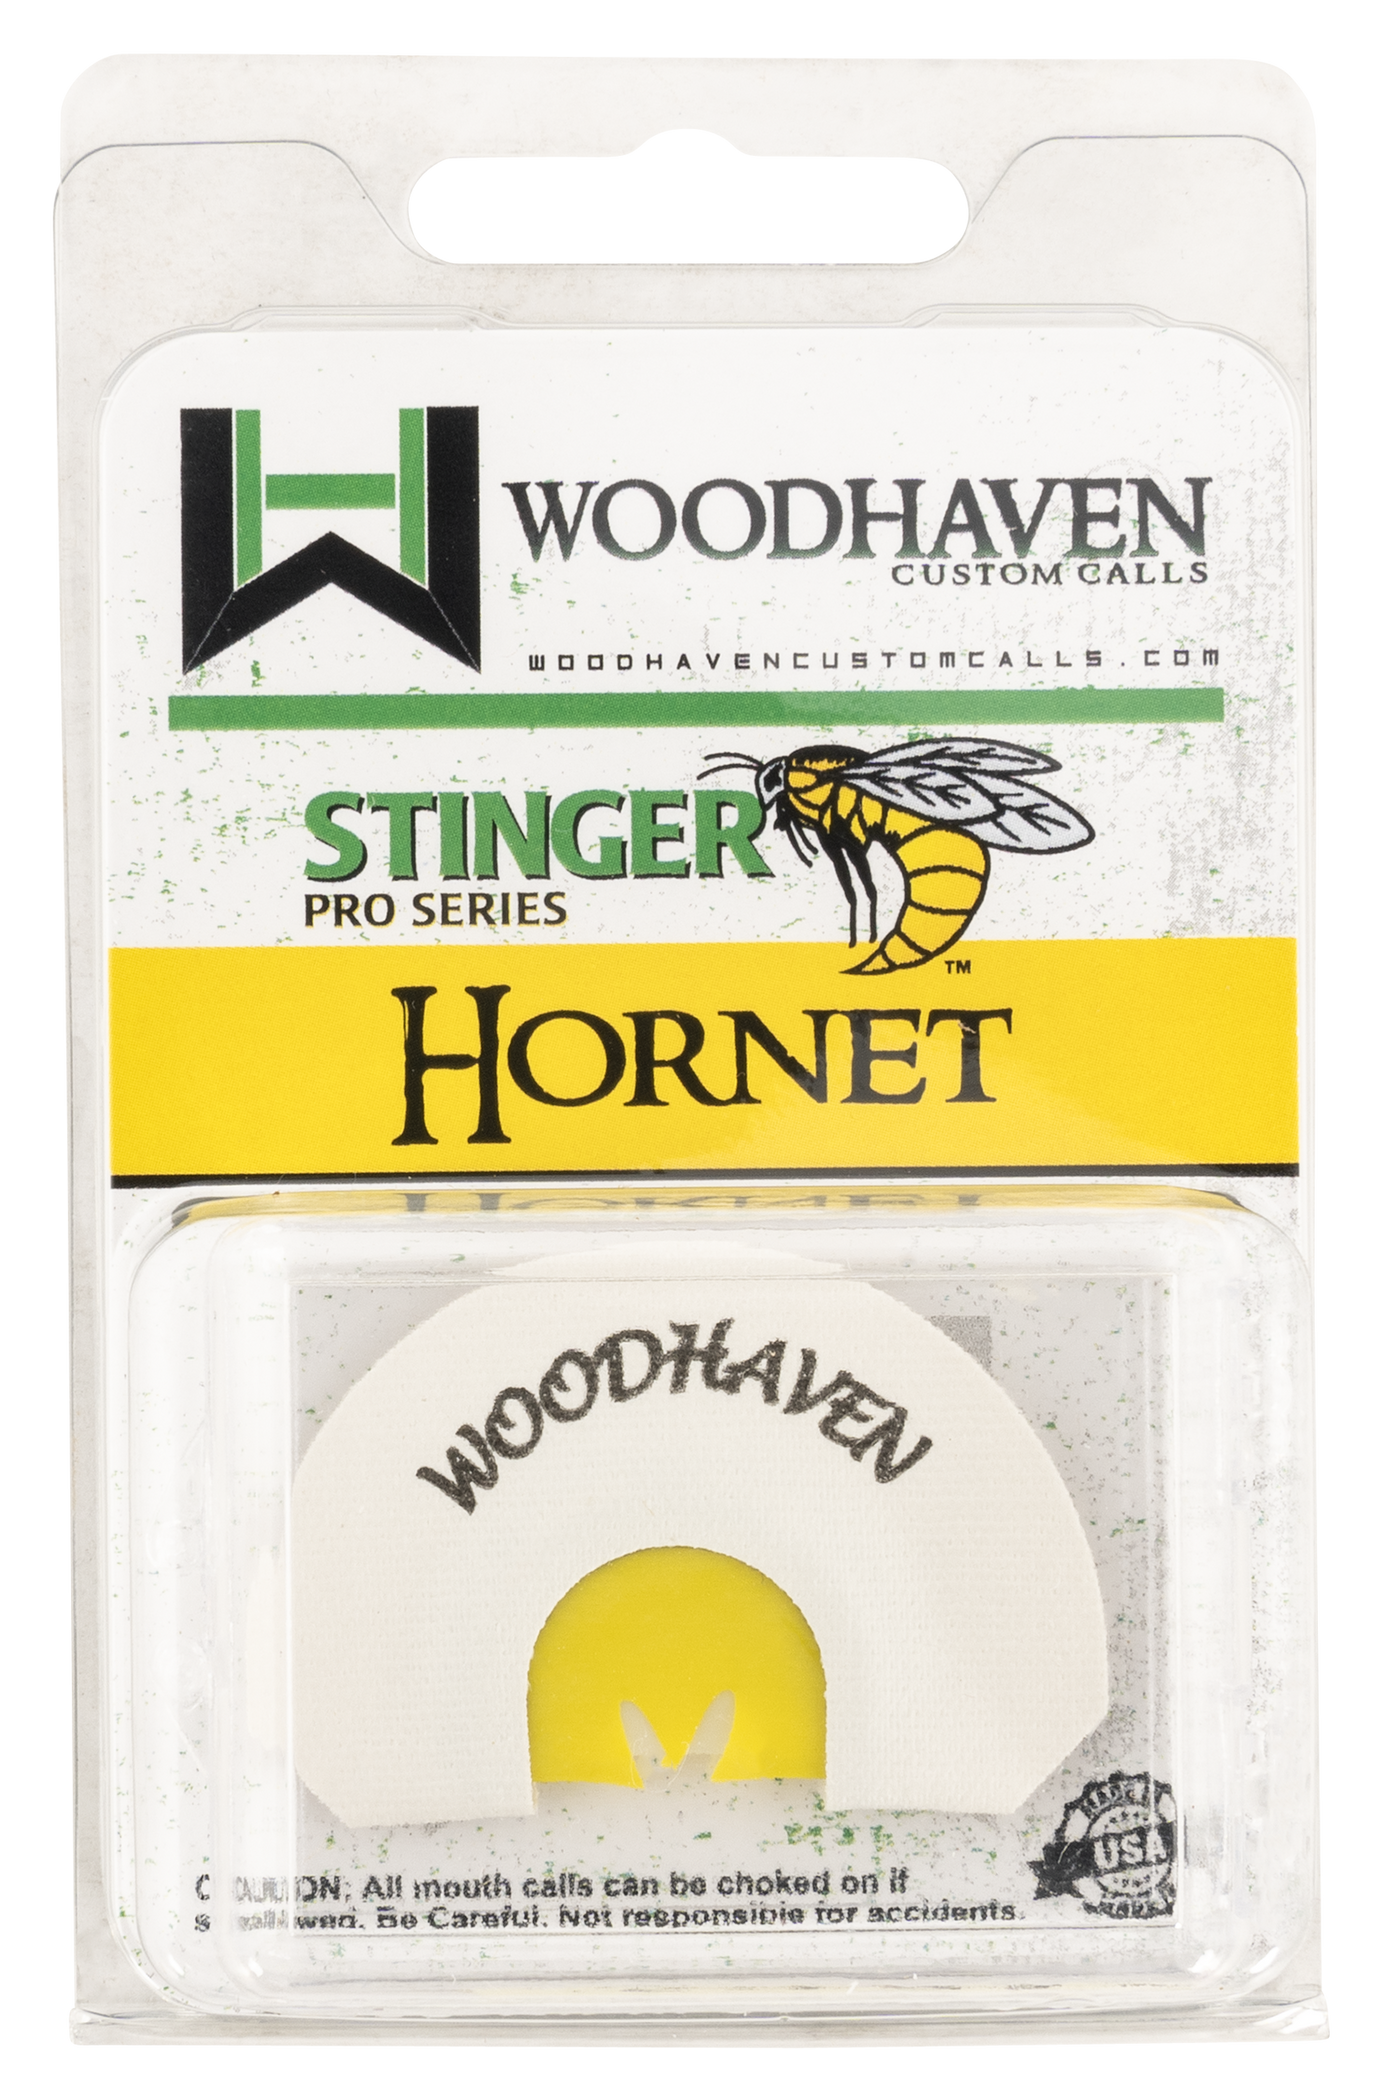 Woodhaven Custom Calls Hornet, Woodhaven Wh007 Hornet